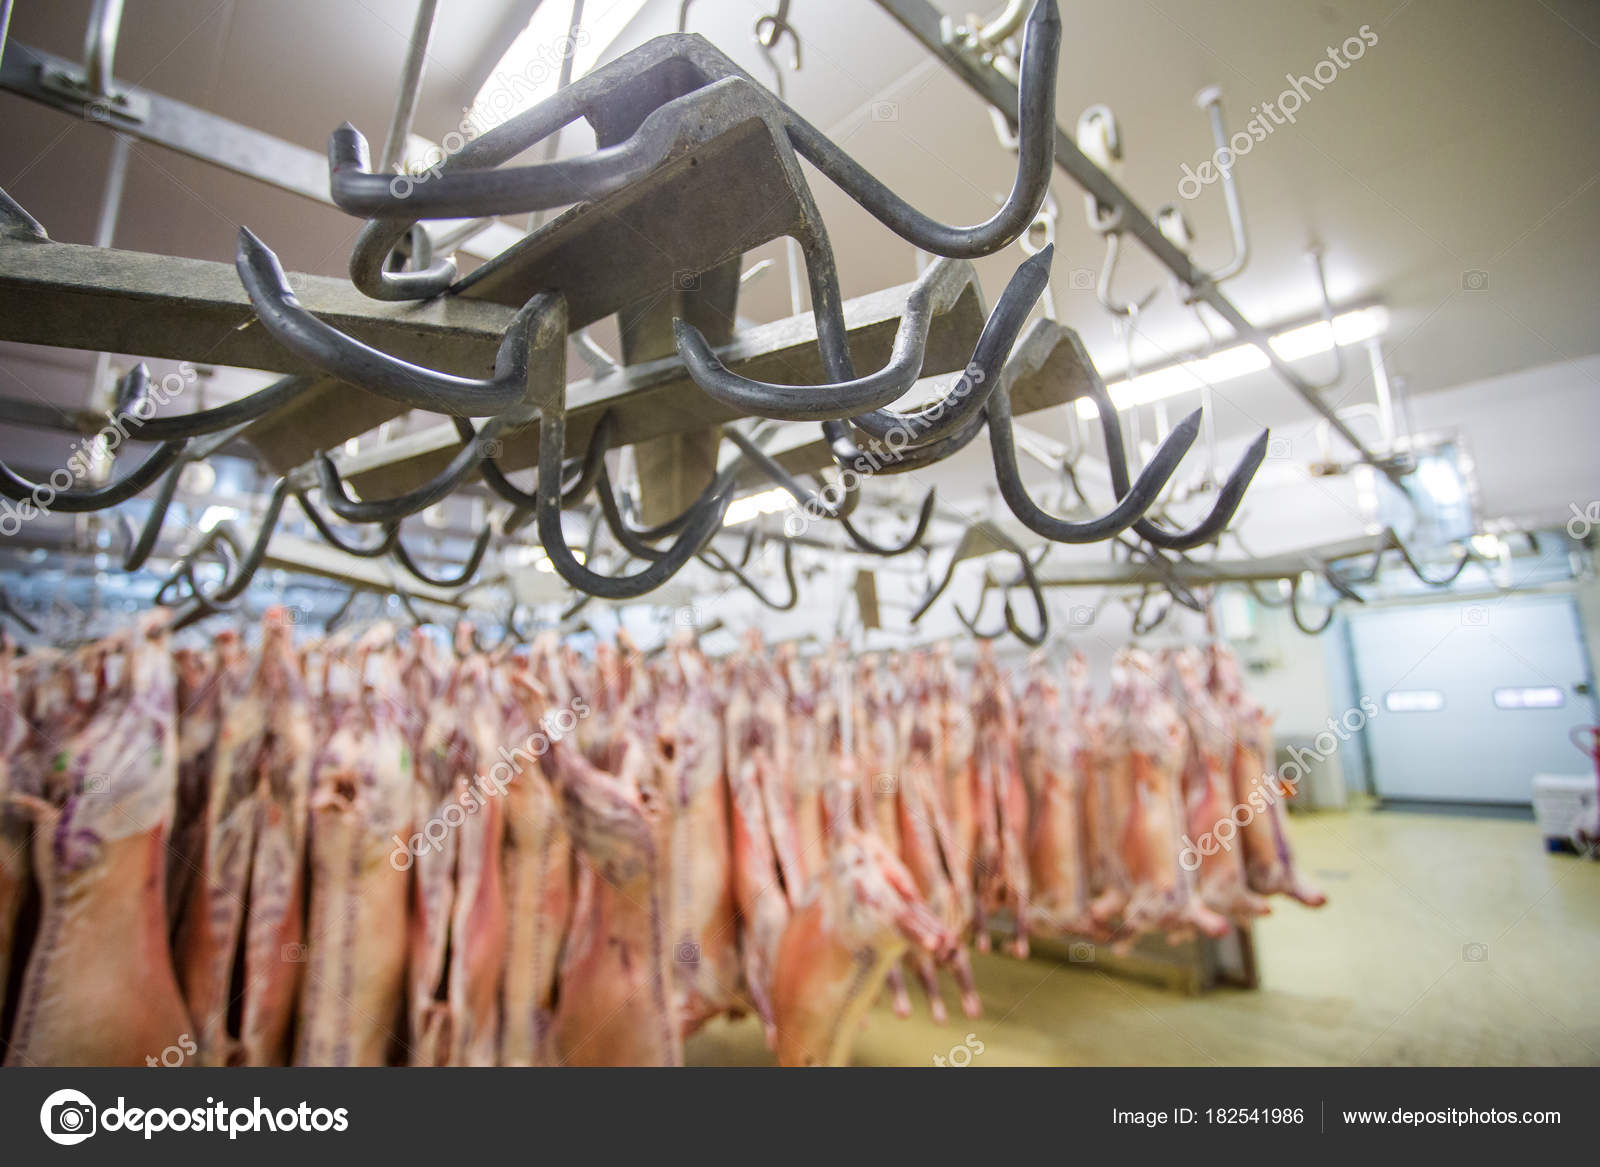 https://st3.depositphotos.com/11866110/18254/i/1600/depositphotos_182541986-stock-photo-meat-hooks-in-a-slaughterhouse.jpg